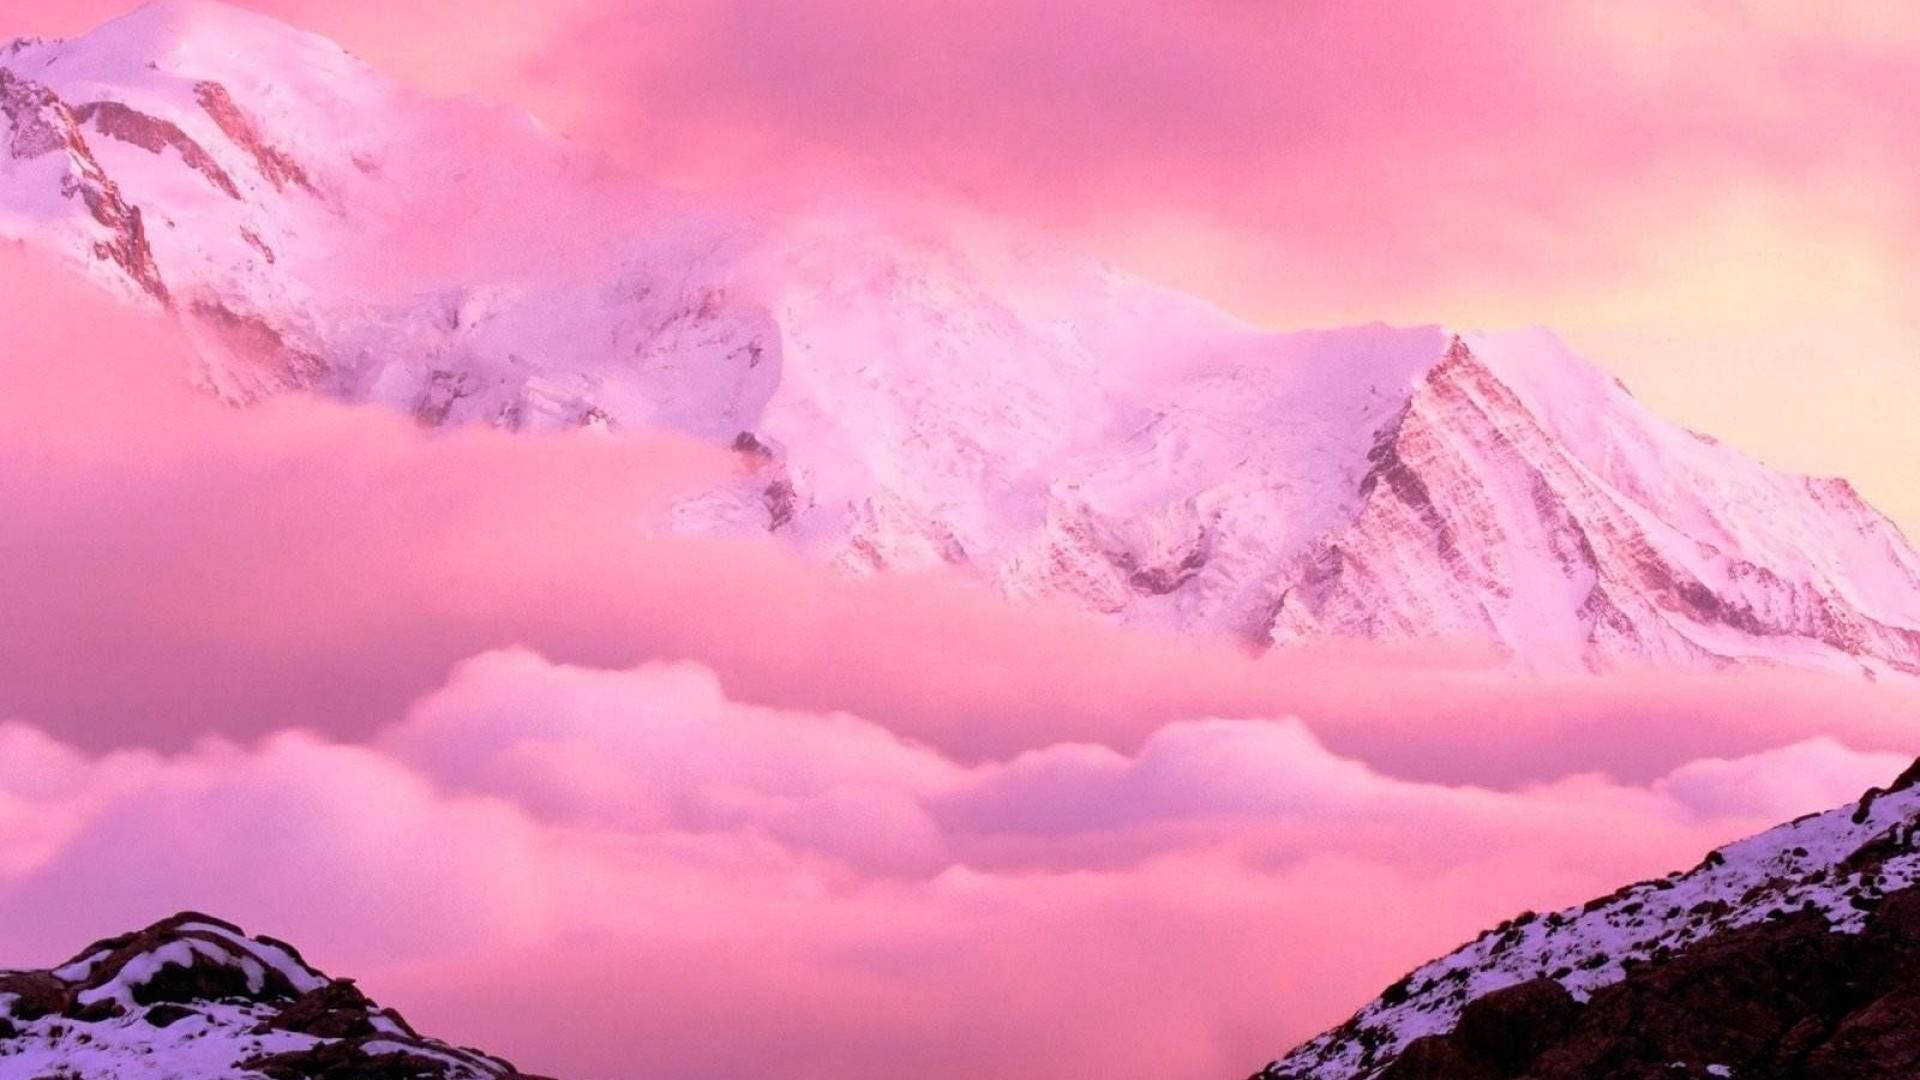 Aesthetic Pink Mountain Wallpaper